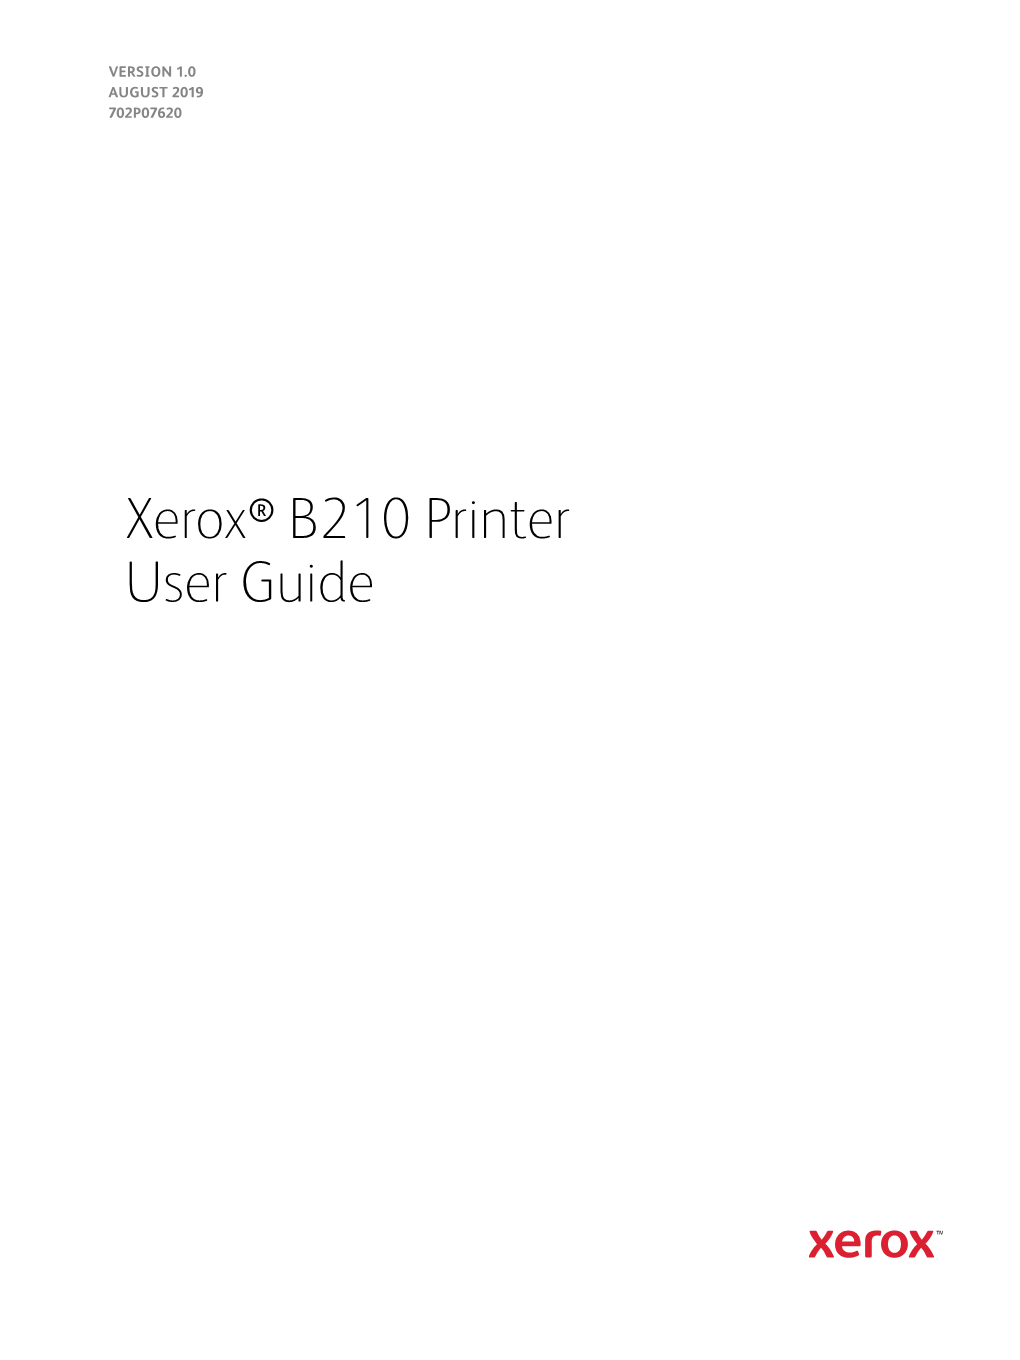 Xerox® B210 Printer User Guide ©2019 Xerox Corporation